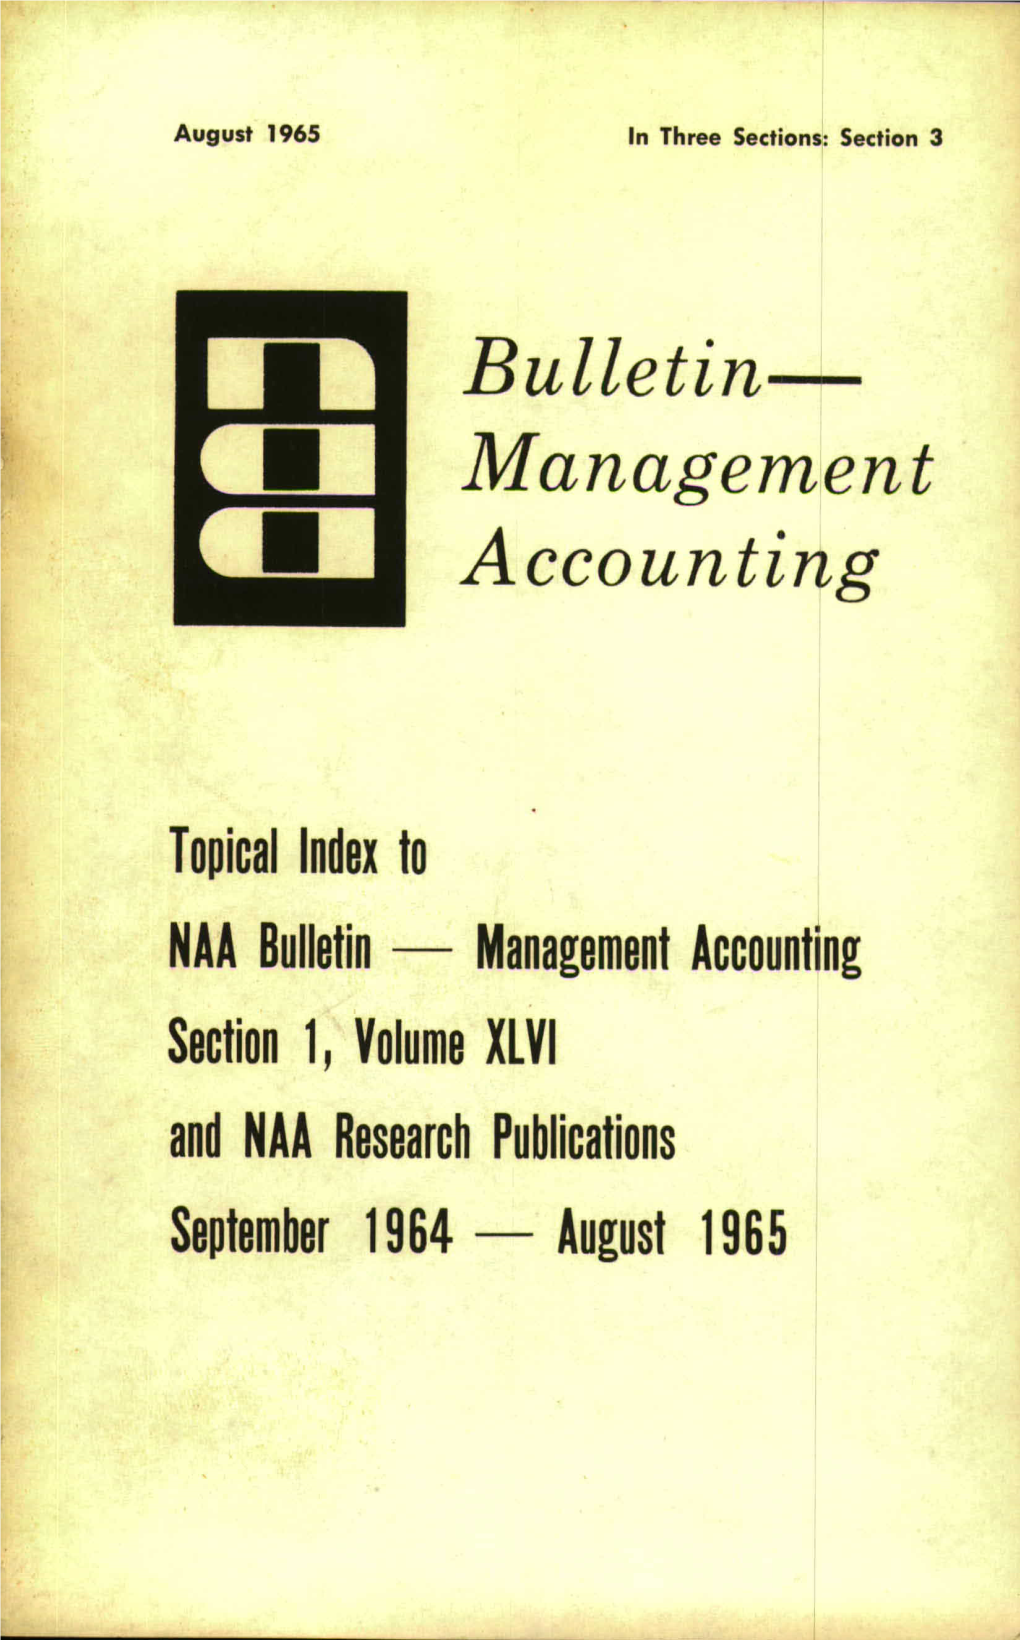 Bulletin 0 Management Accounting